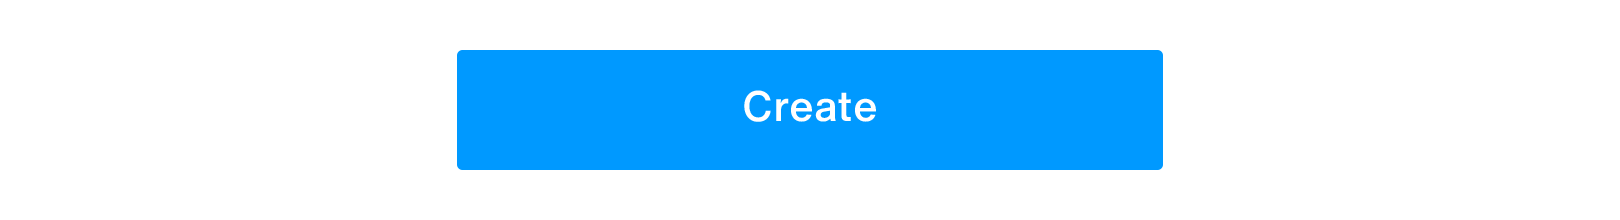 Create button 02